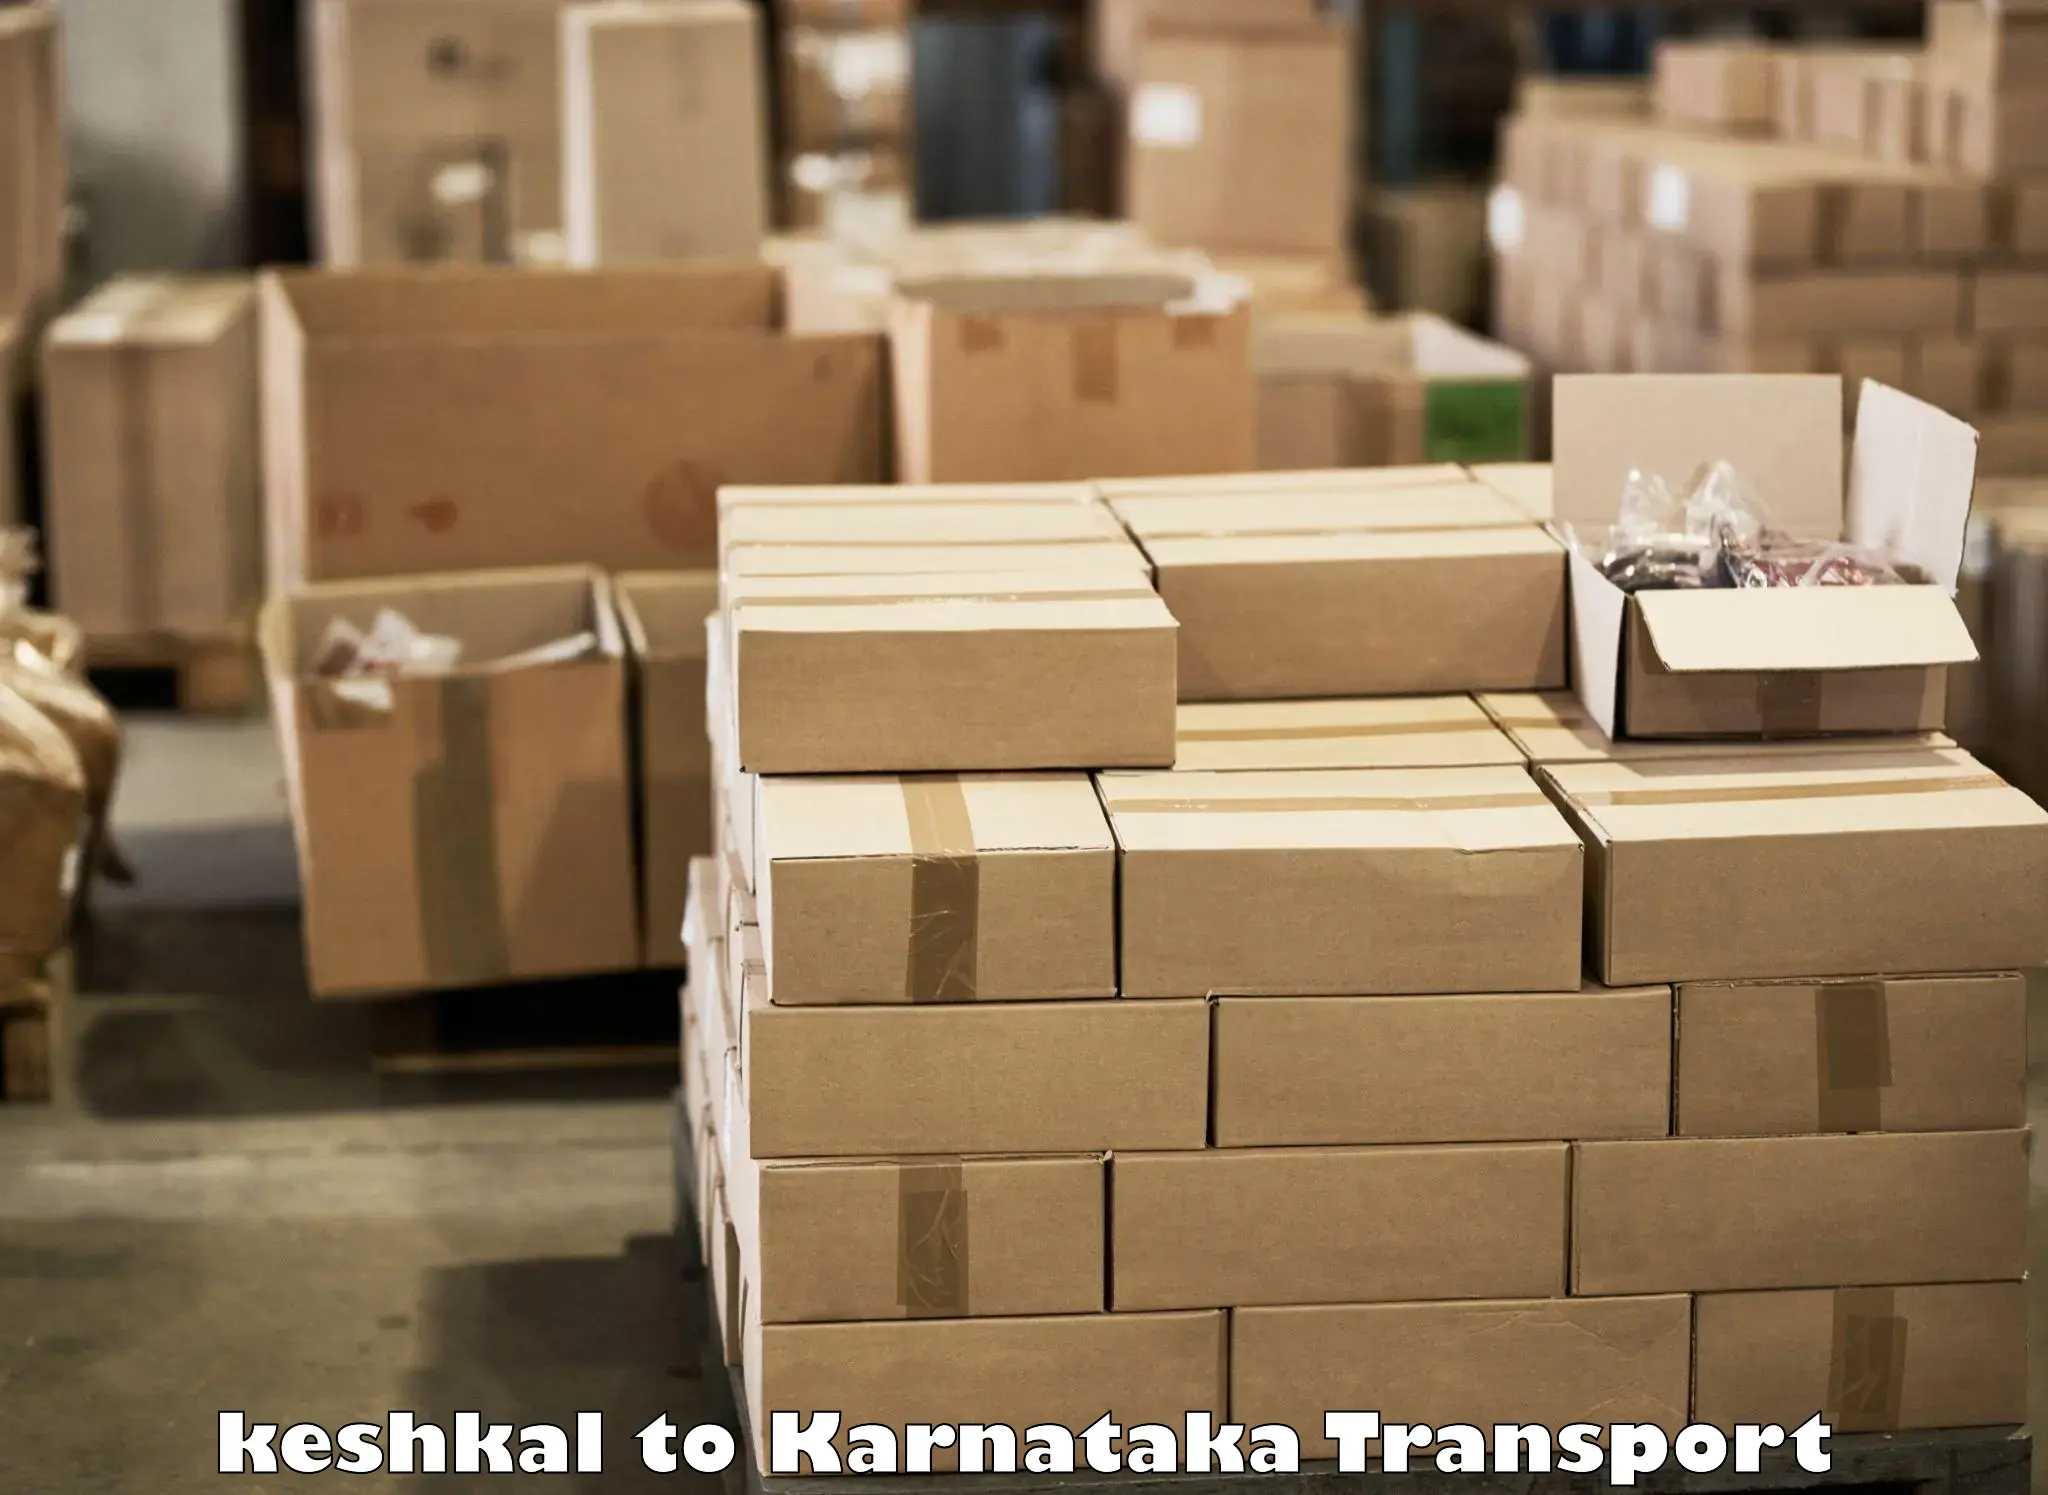 Furniture transport service in keshkal to Kollegal